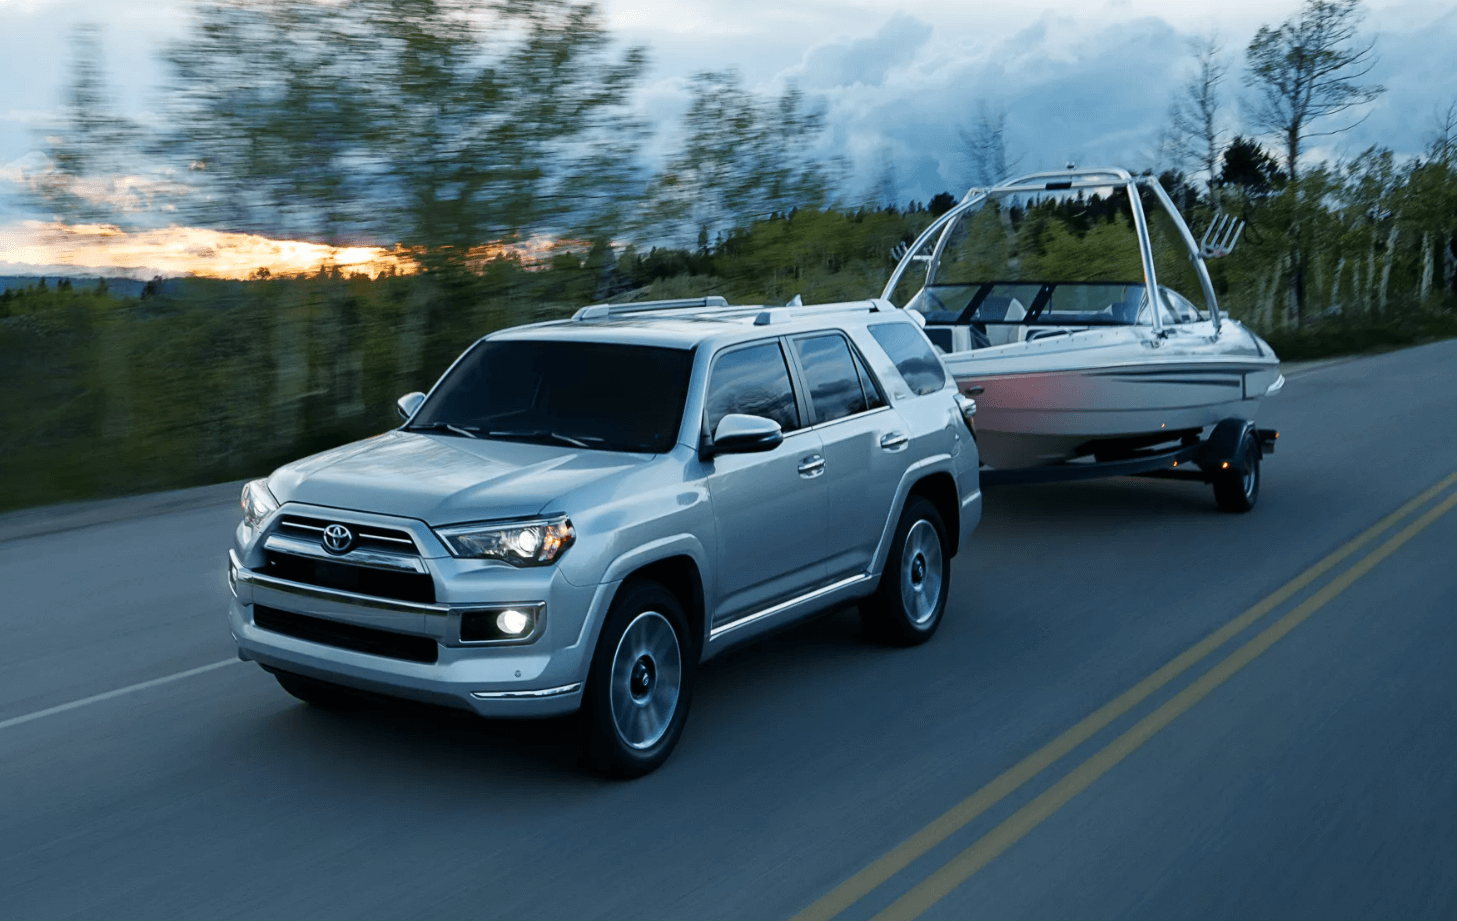 2019 Toyota 4Runner Towing Capacity